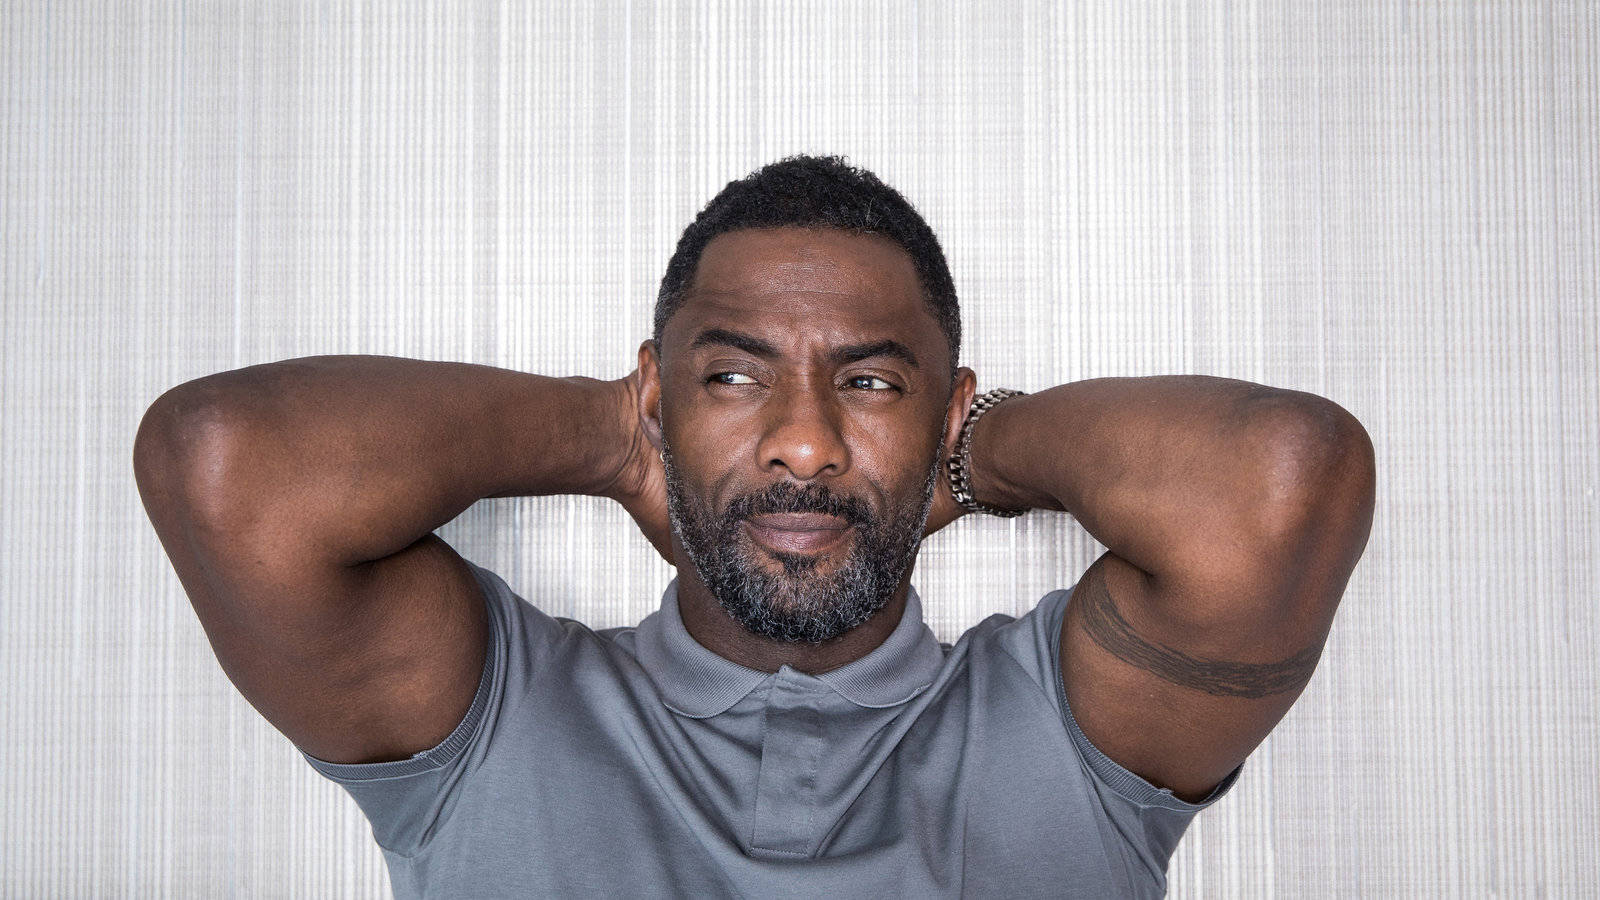 Idris Elba Hands On Back Of Head Wallpaper